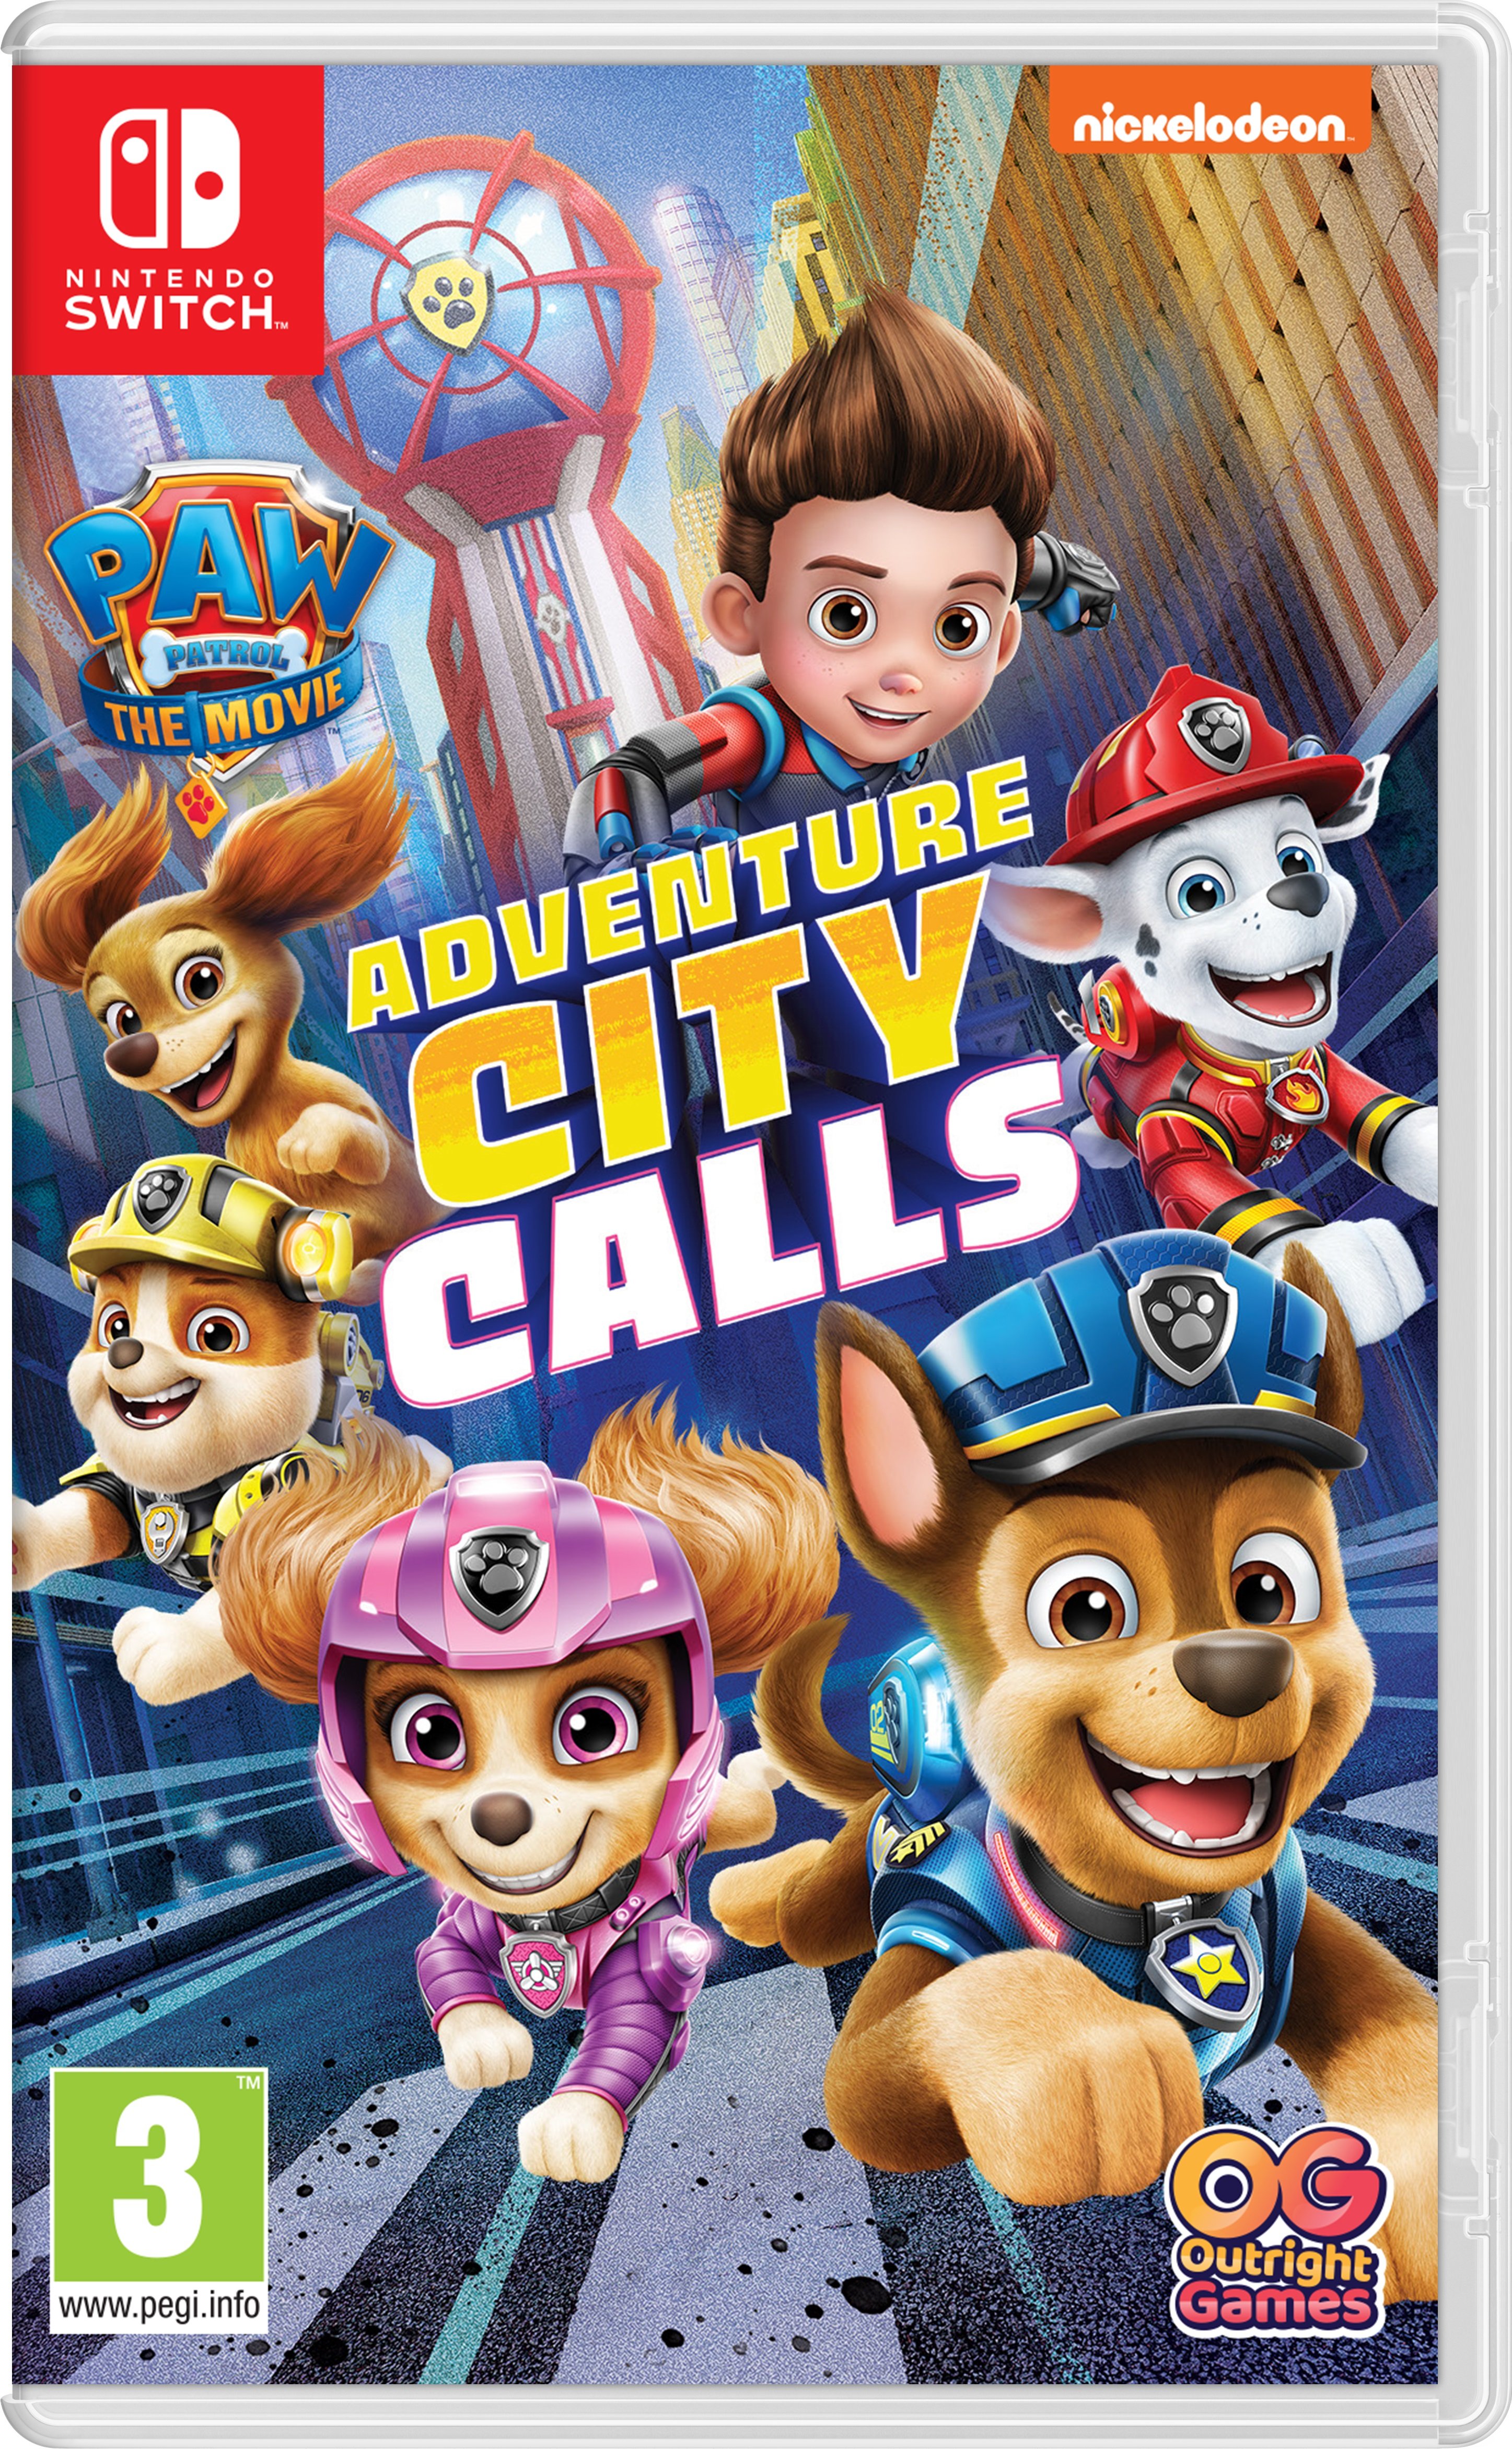 PAW Patrol The Movie Adventure City Calls - Nintendo Switch Játékok